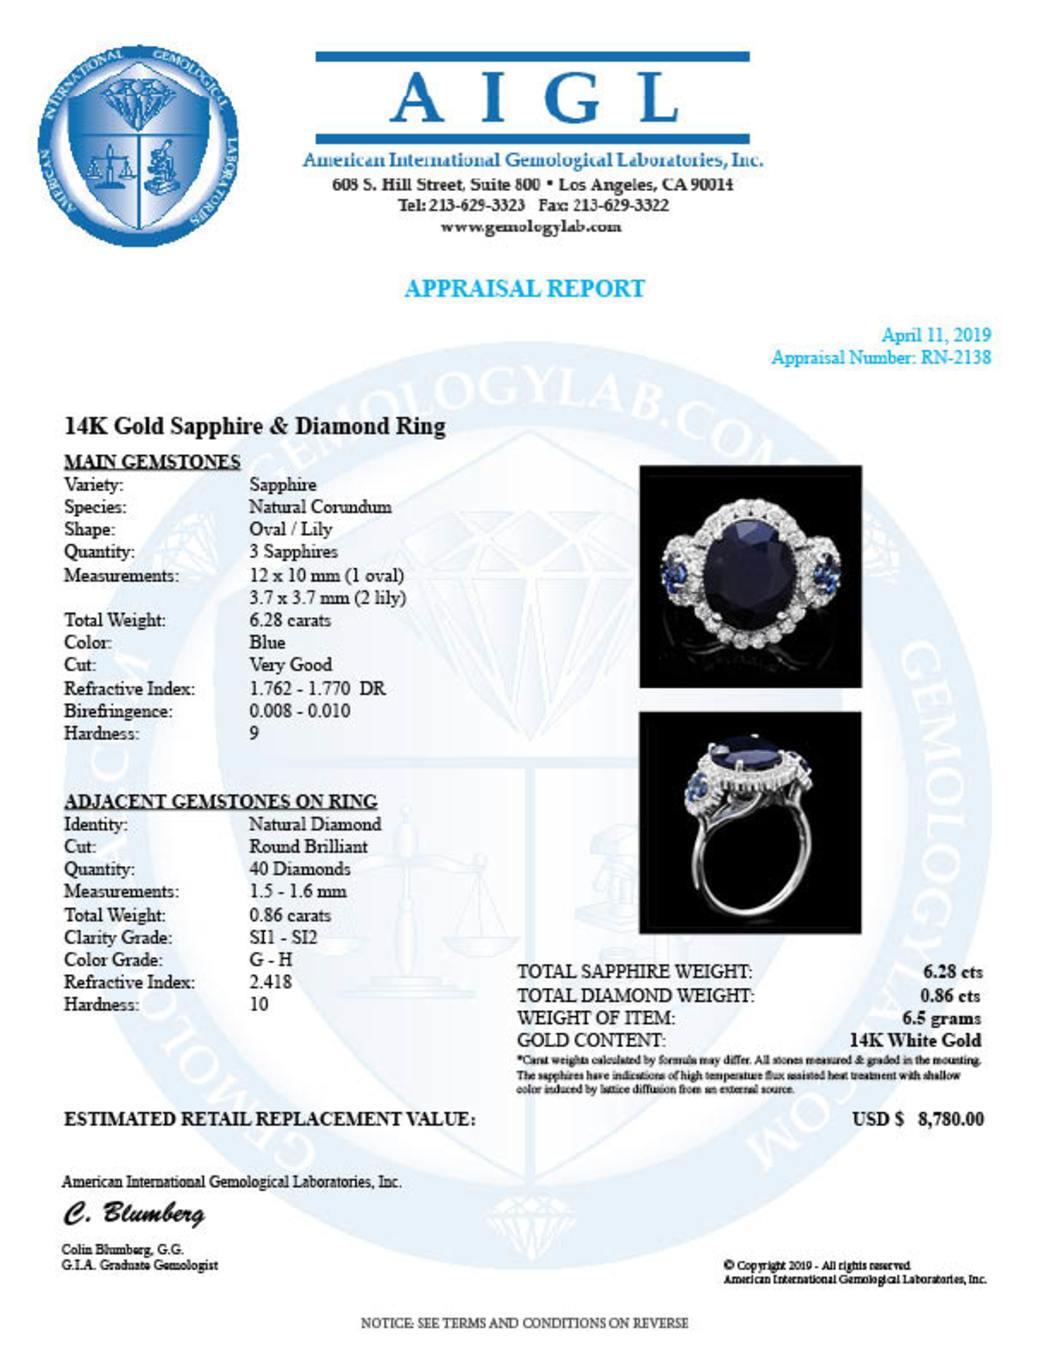 14K White Gold 6.28ct Sapphire and 0.86ct Diamond Ring